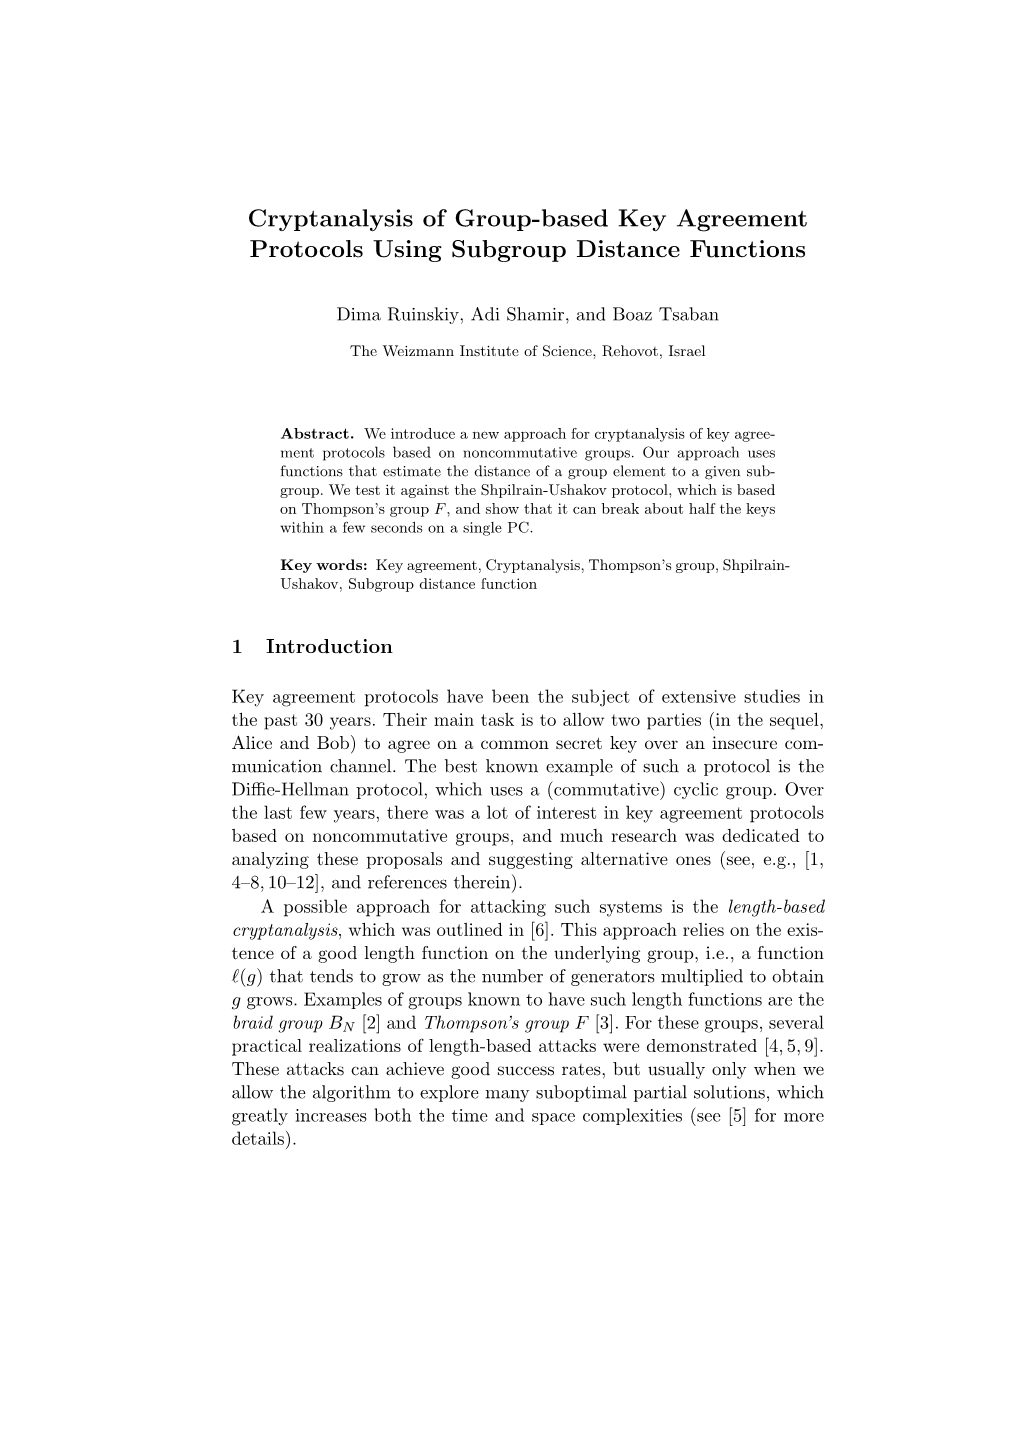 Cryptanalysis of Group-Based Key Agreement Protocols Using Subgroup Distance Functions